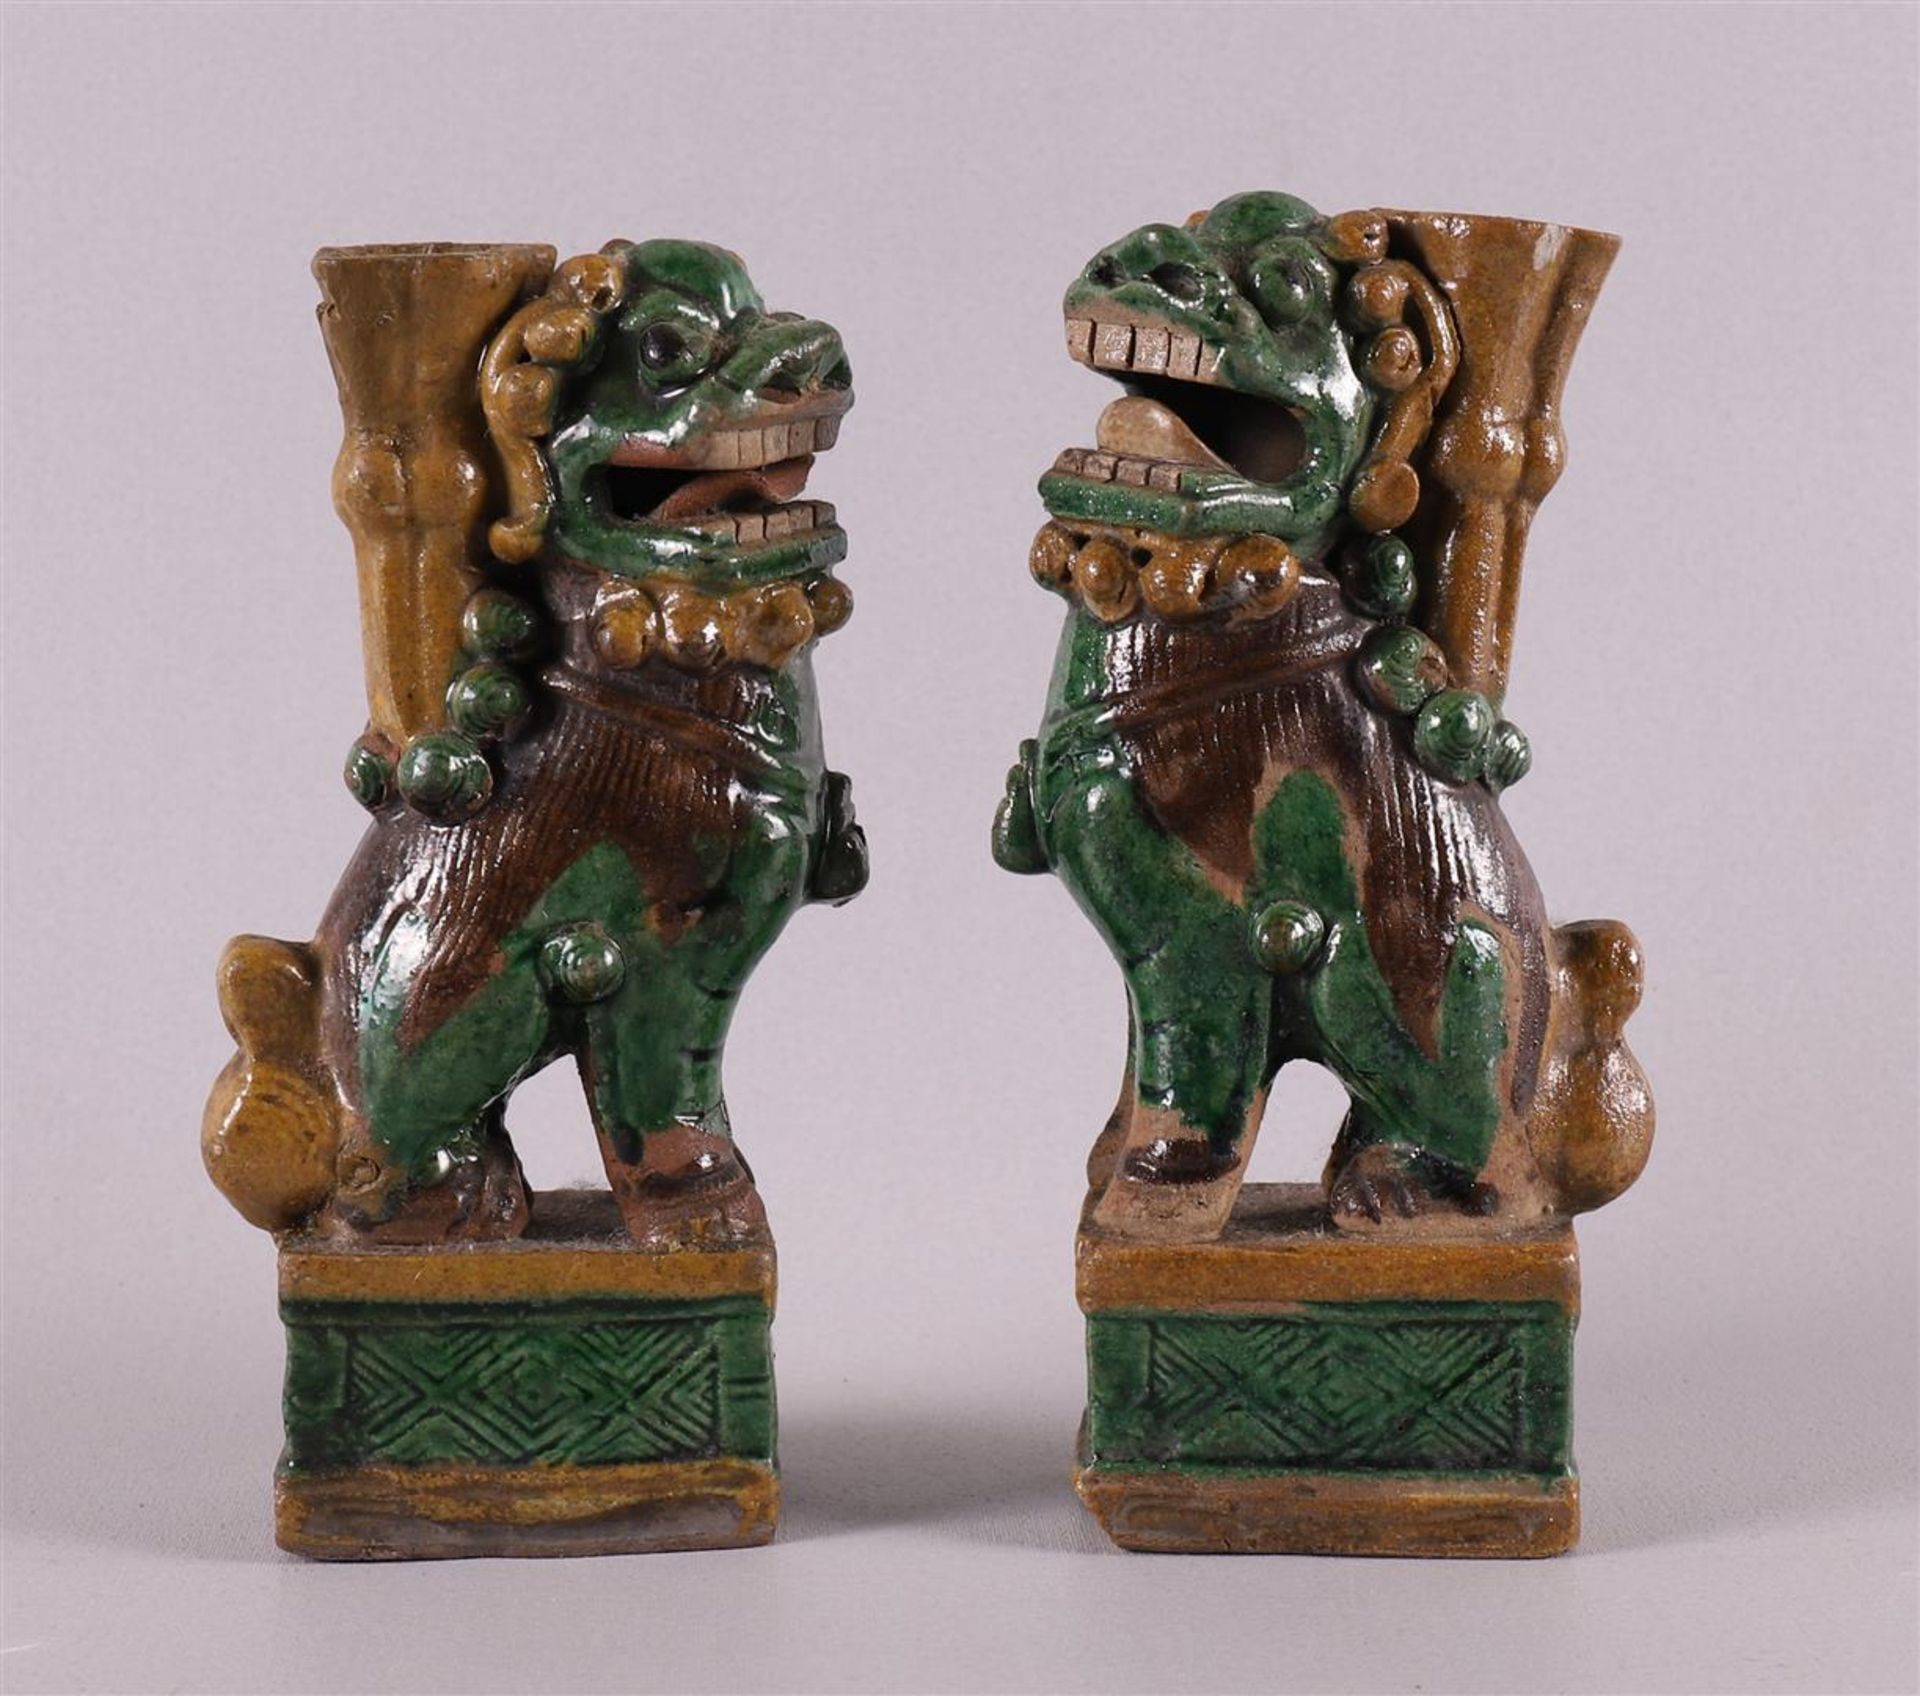 A pair of famille verte porcelain temple lions, China, 18th century, h 15.5 cm, tot. 2x.